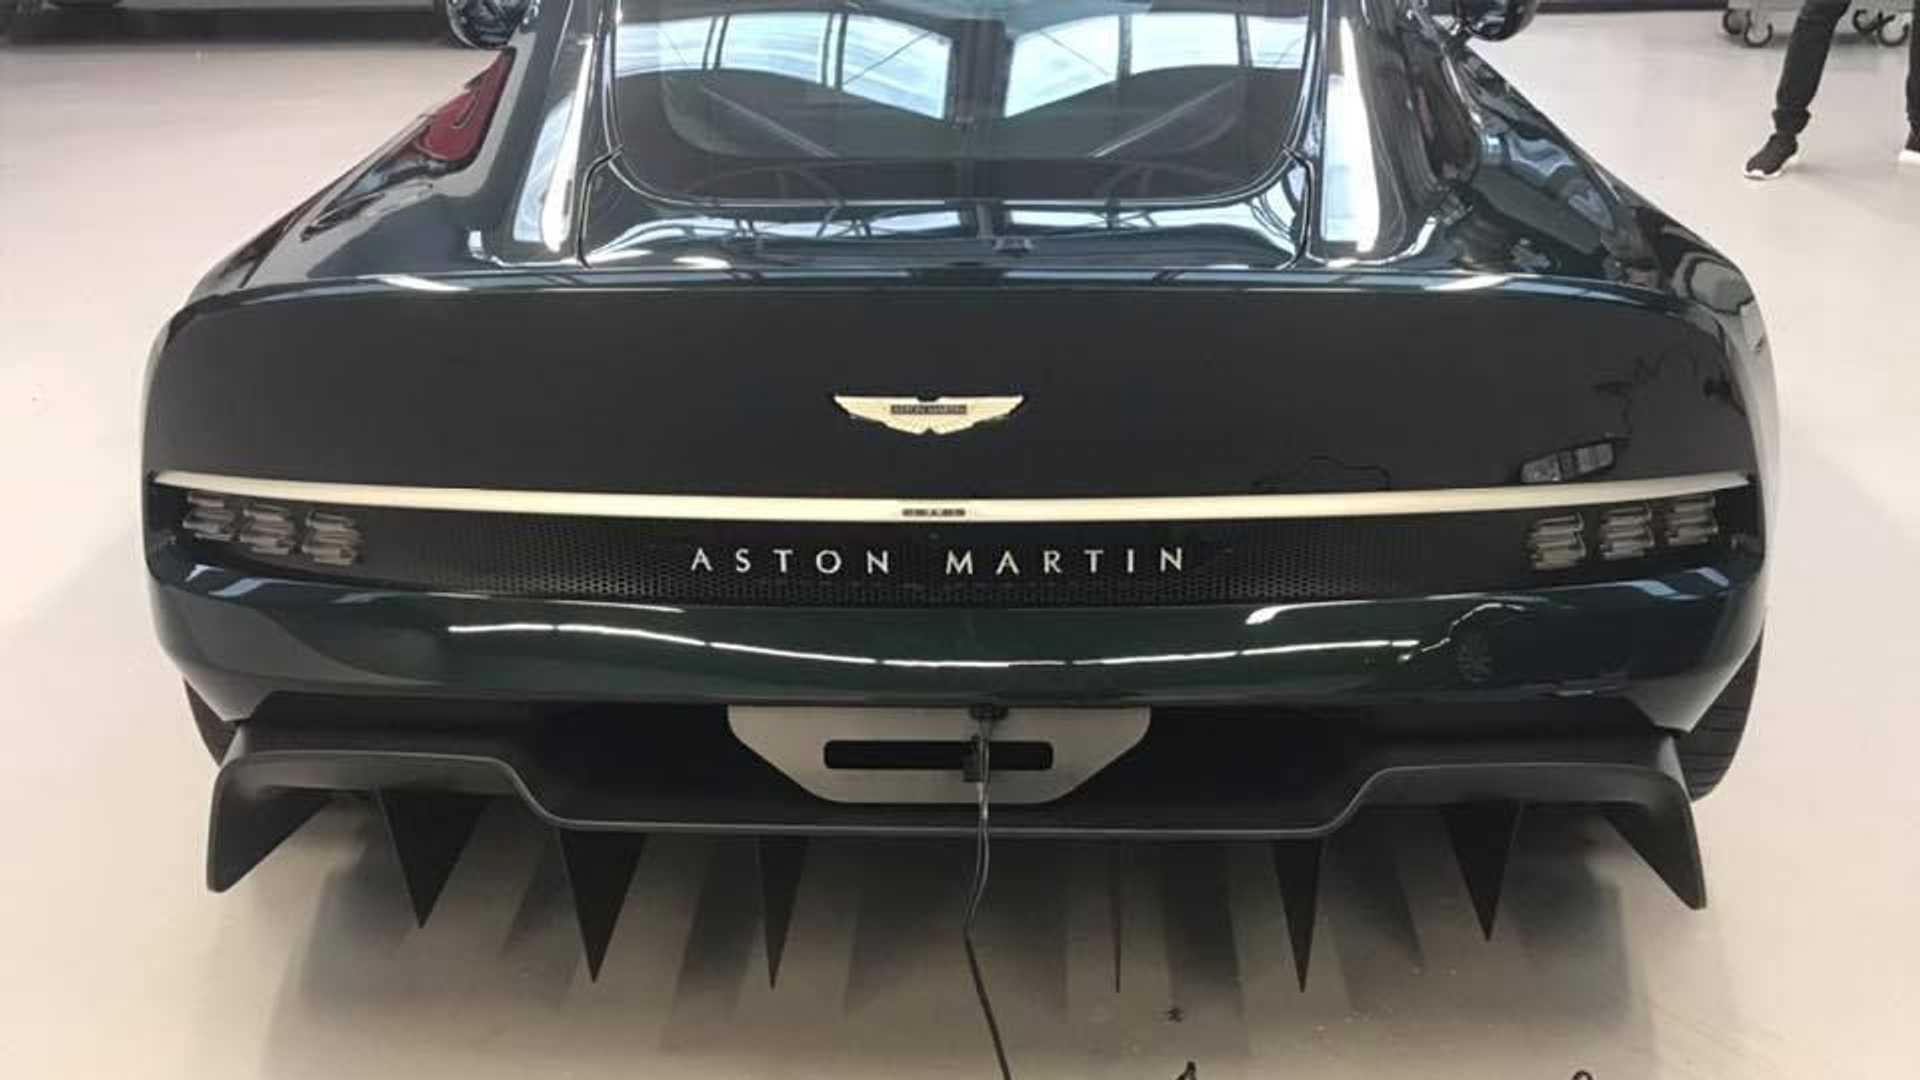 Aston Martin Victor At Aston Martin Dealer In Antwerp, Belgium. Motor1.com Photo